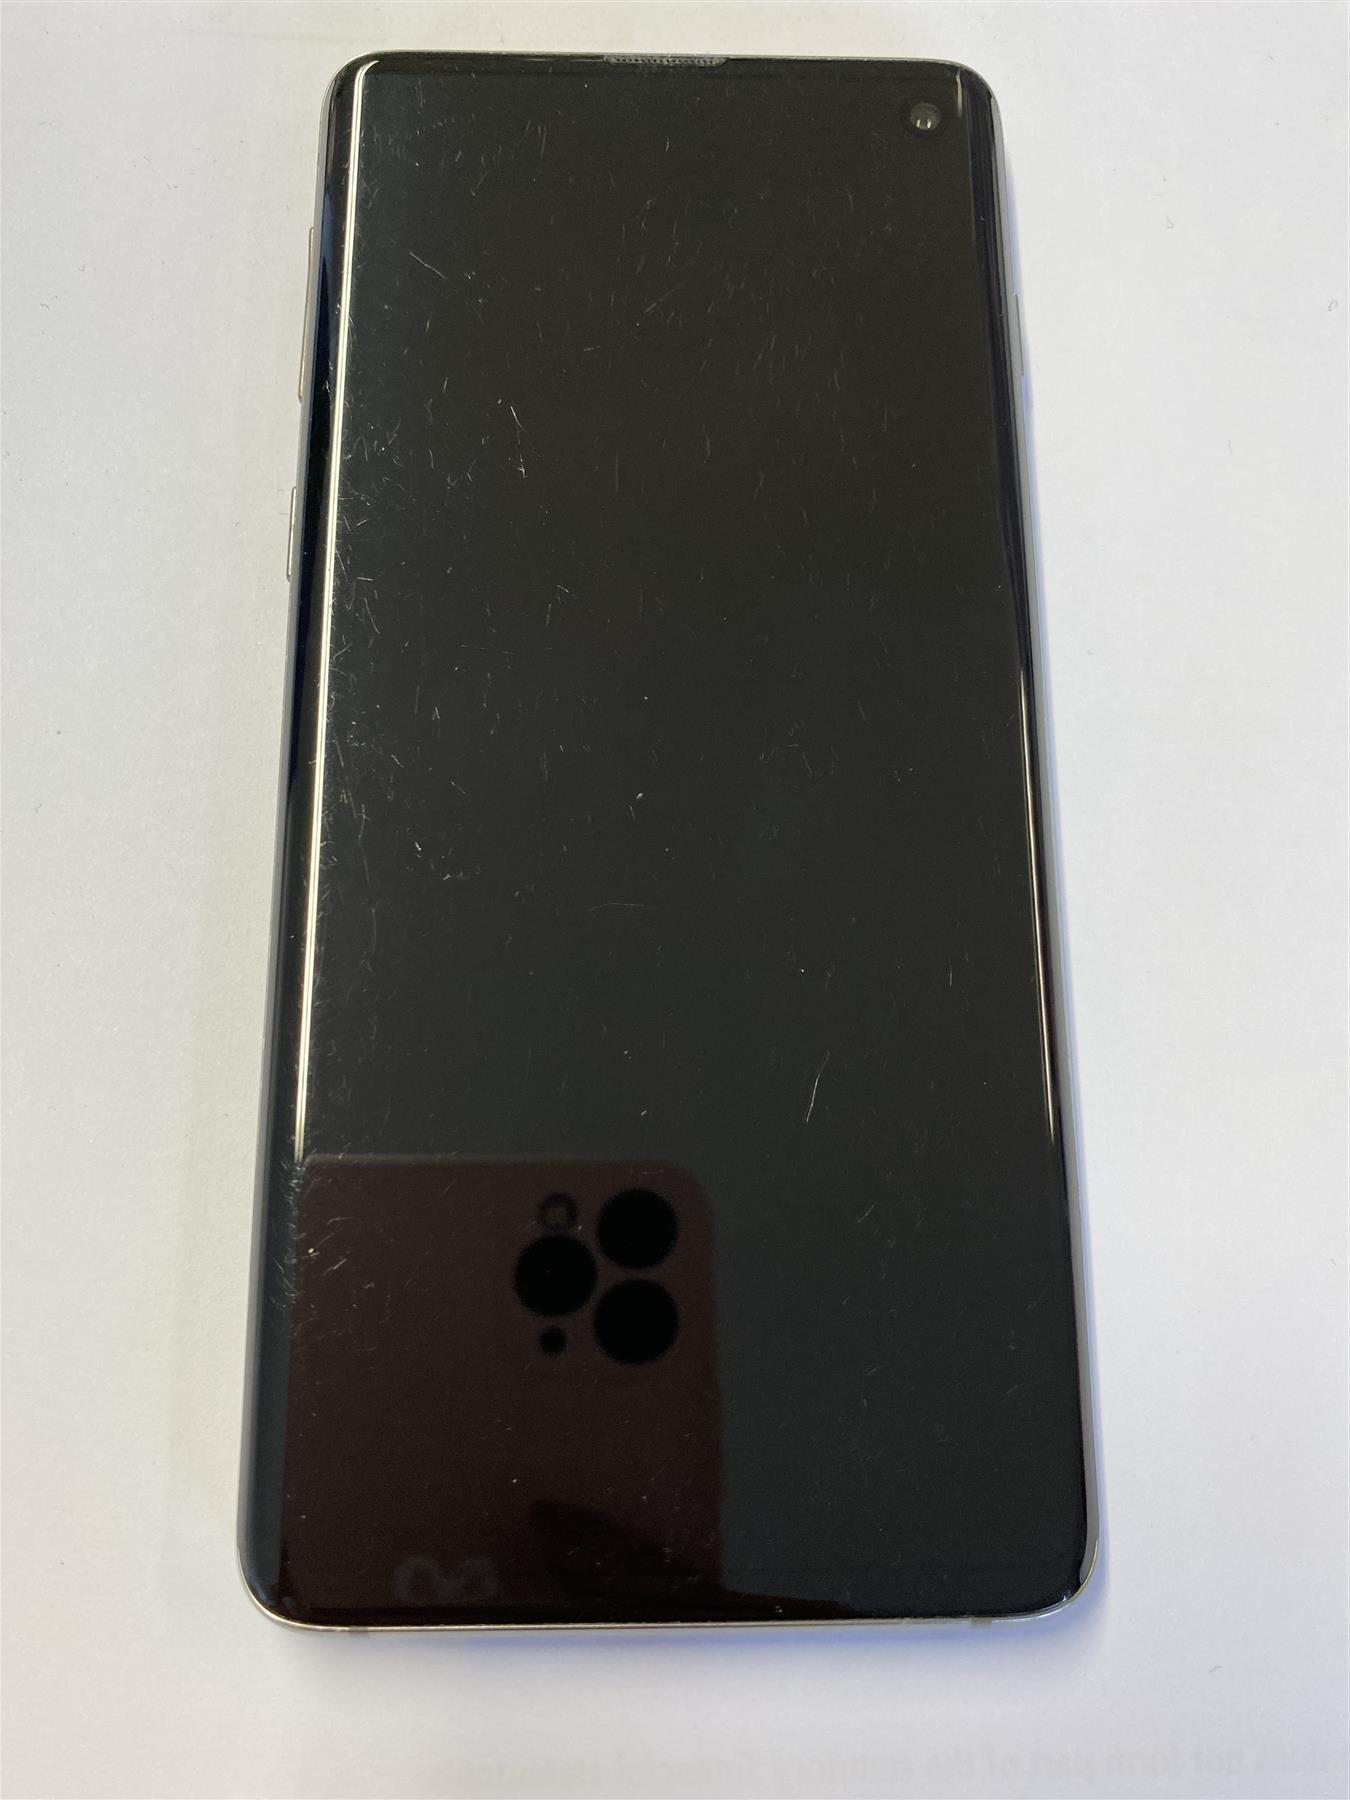 Samsung Galaxy S10 128GB Prism Black - Used